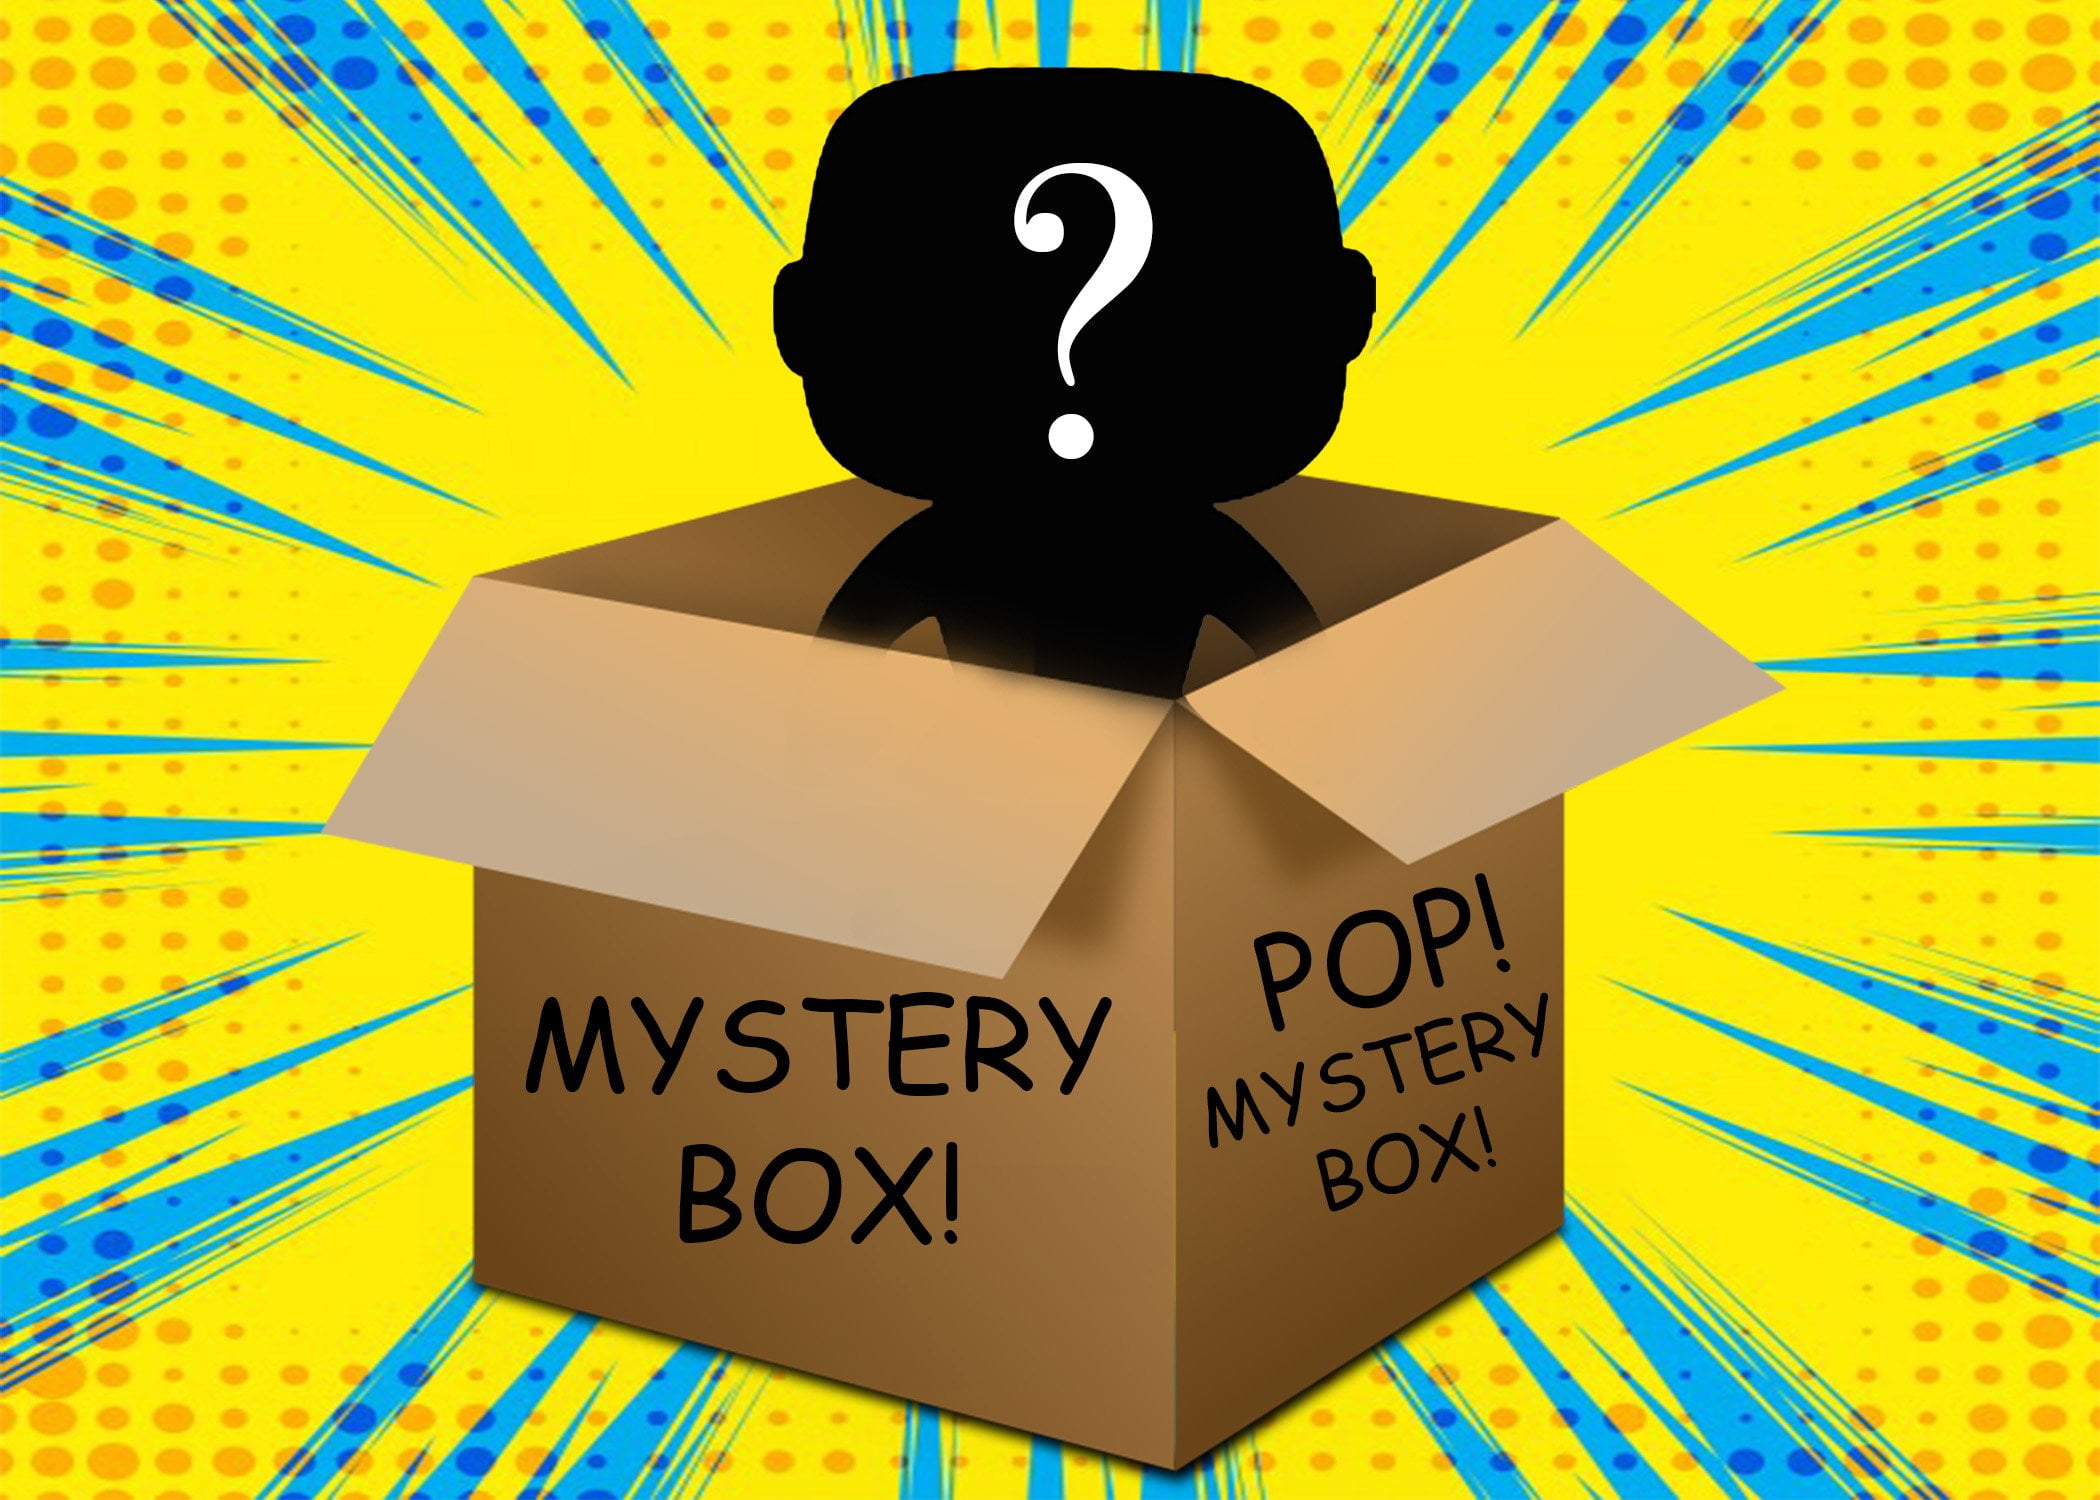 Pop boxes. Mystery Box. Mystery Box надпись. Mystery Box для детей. Funko Pop Mystery Box.